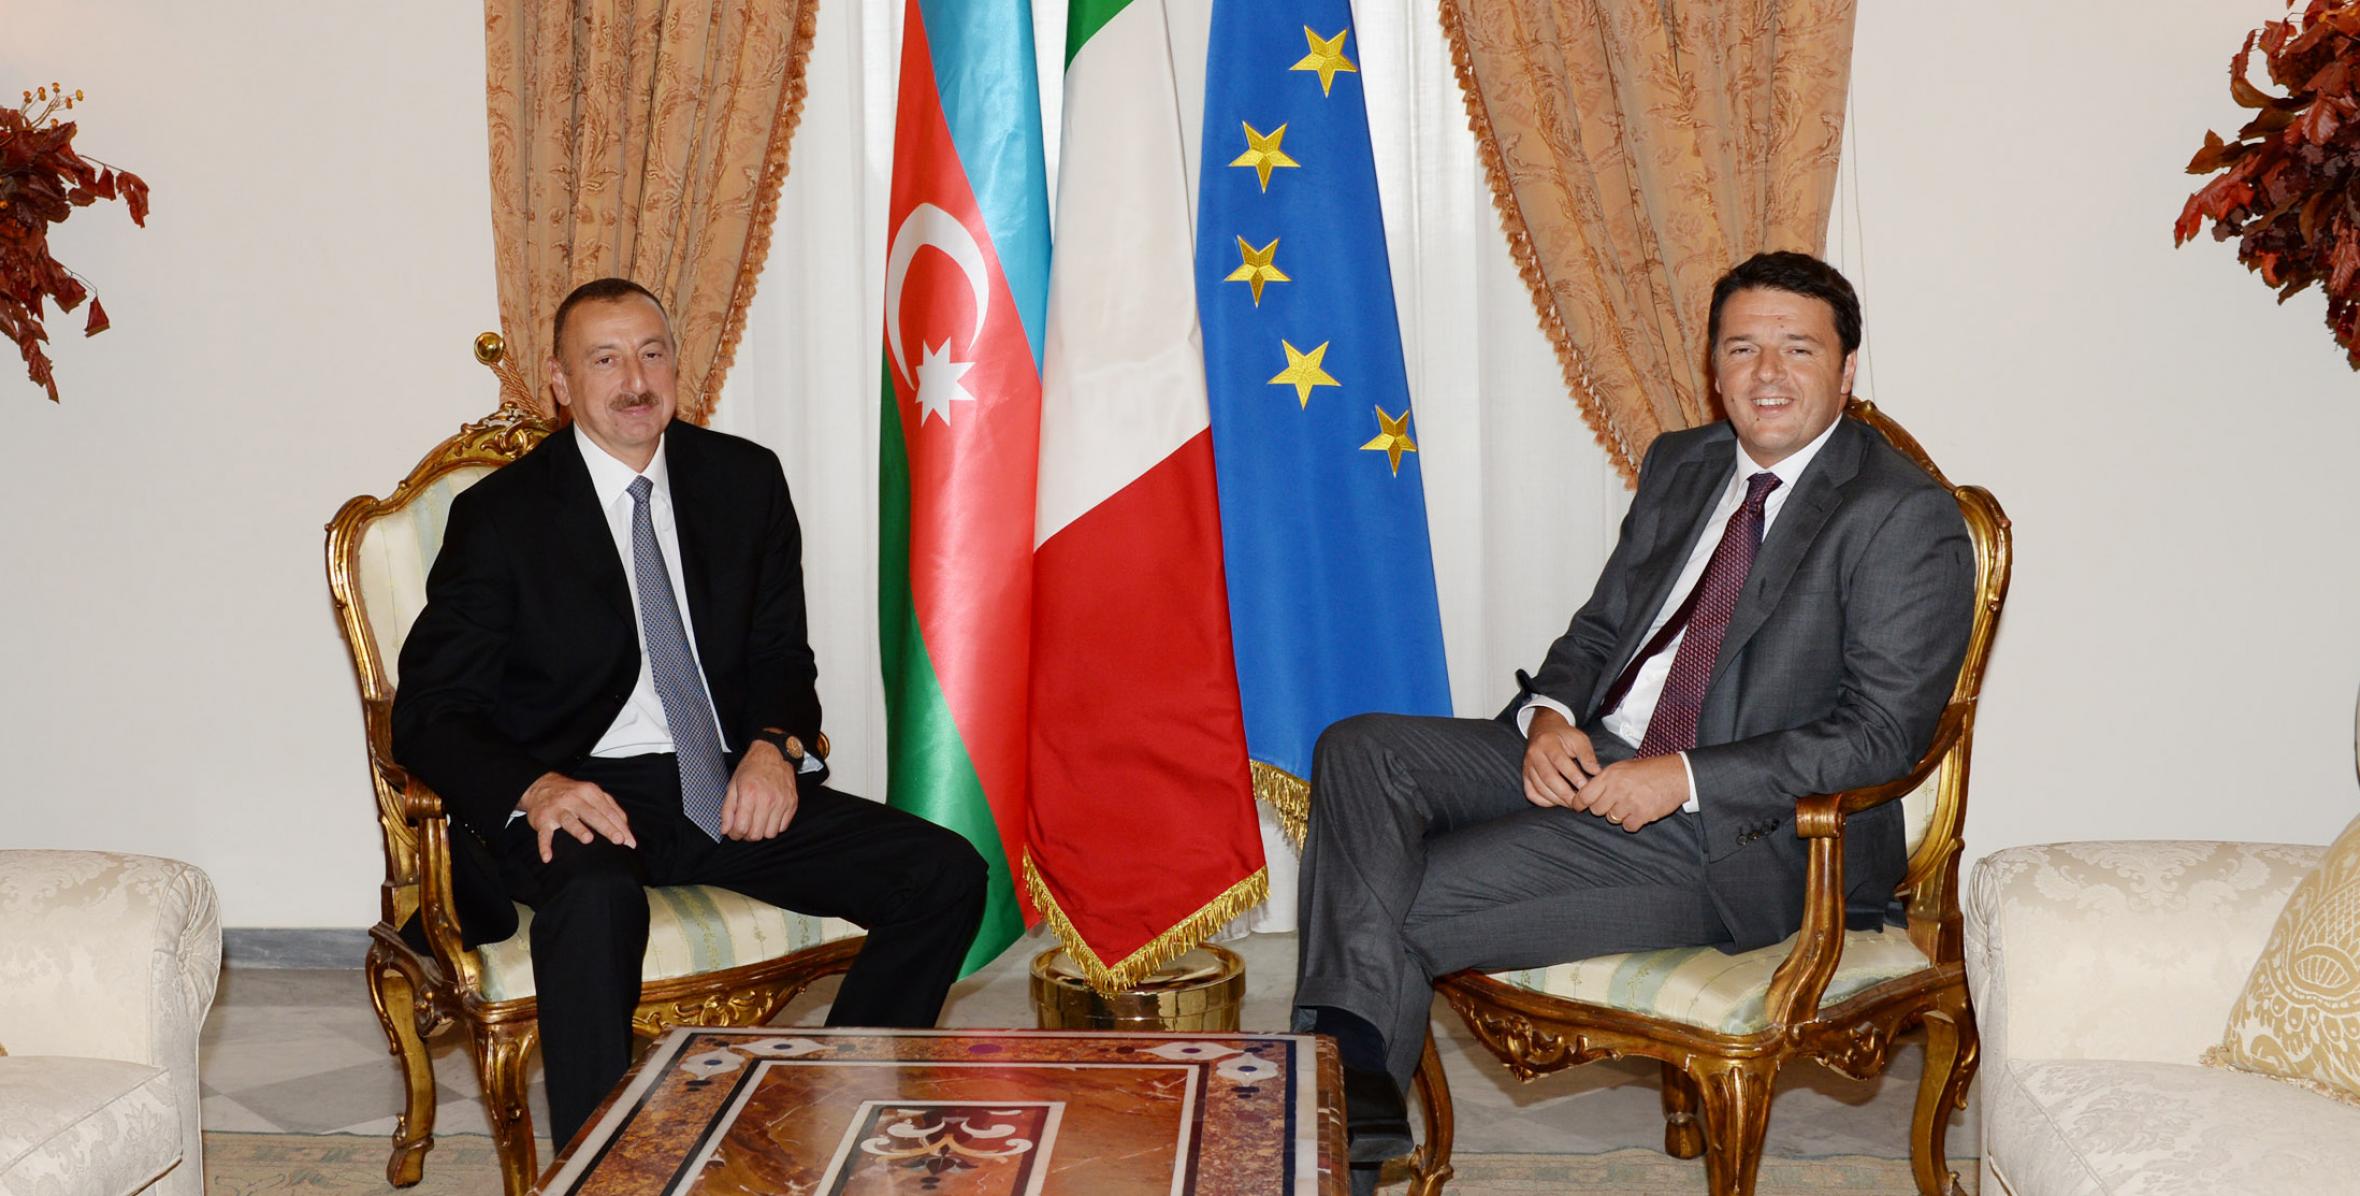 Ilham Aliyev met with Italian Prime Minister Matteo Renzi